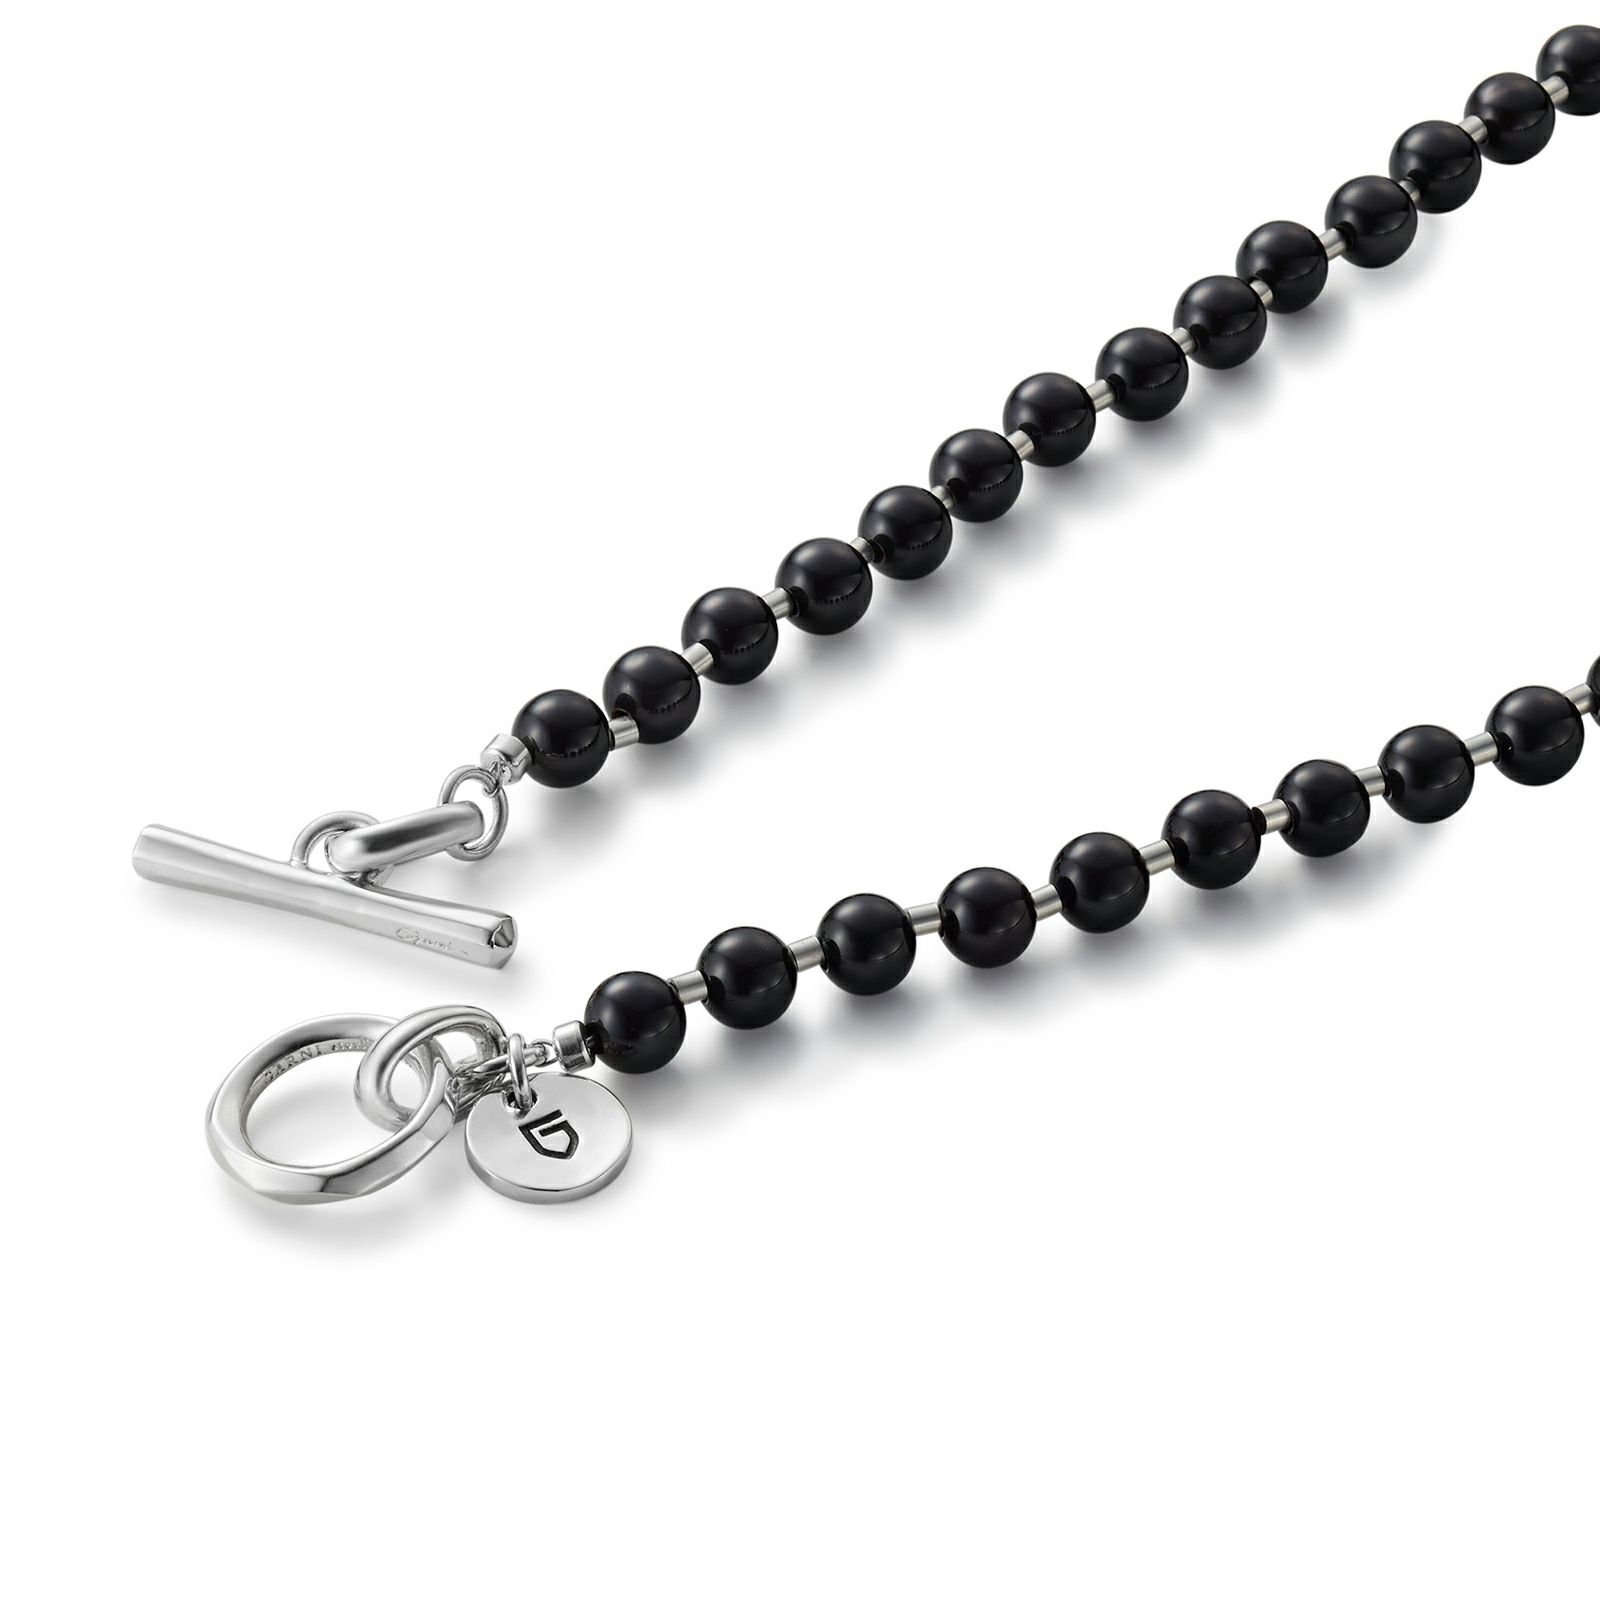 Stone Ball Chain Necklace | GARNI ONLINE STORE